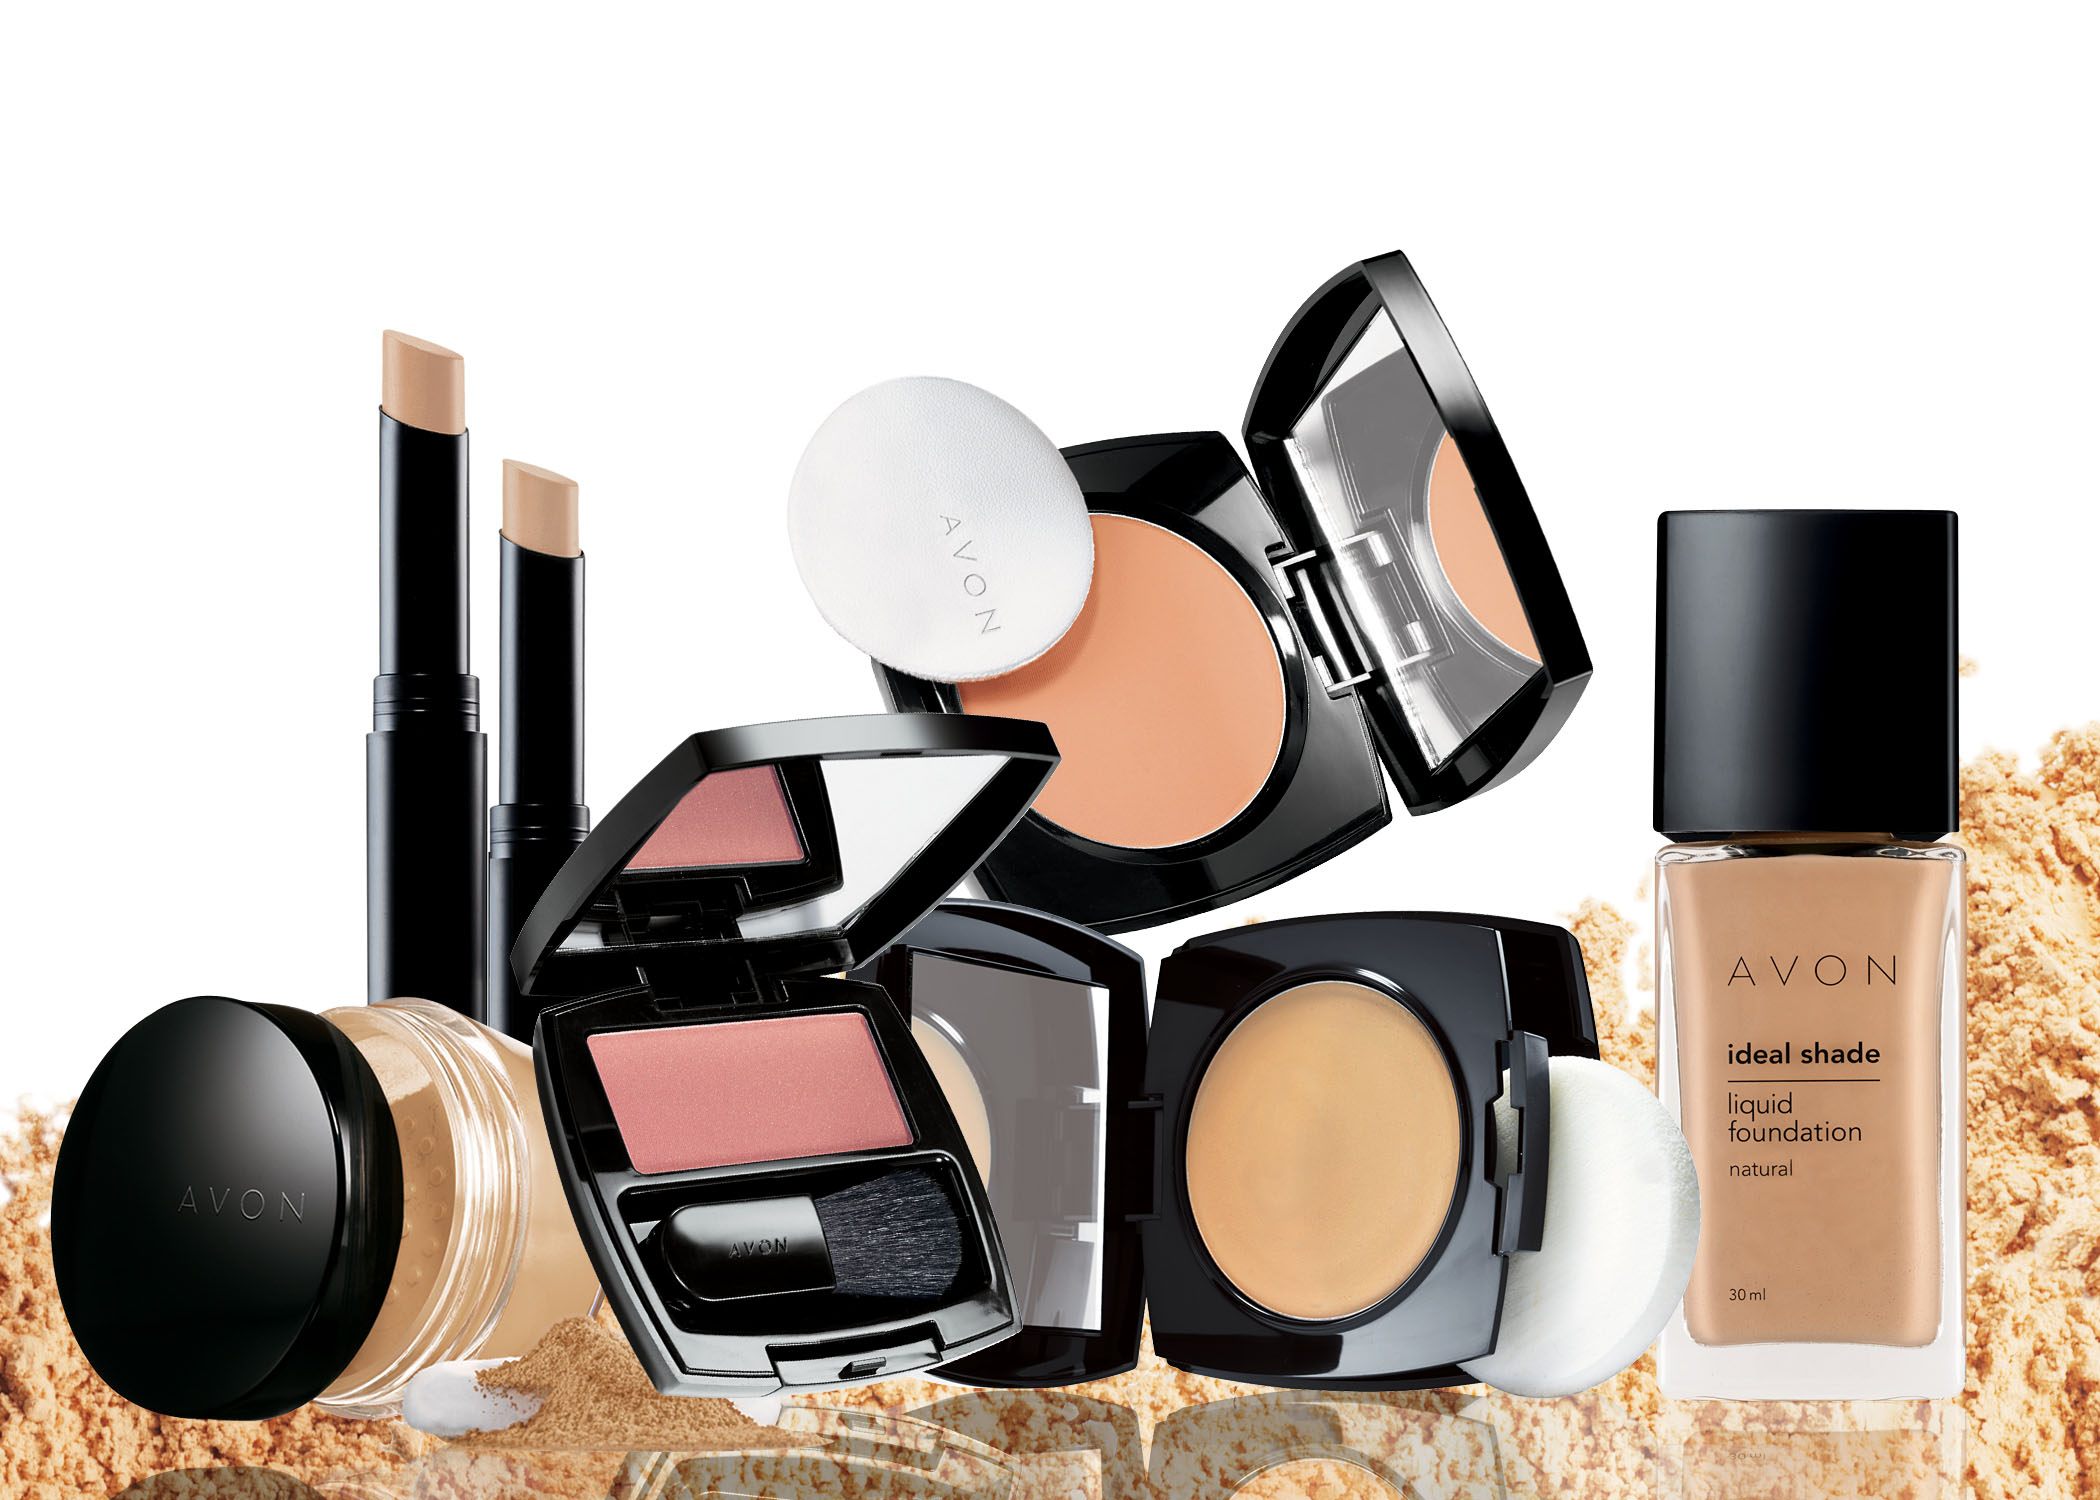 Top 10 Cosmetics brands in the world - Top Cosmetics Brands 